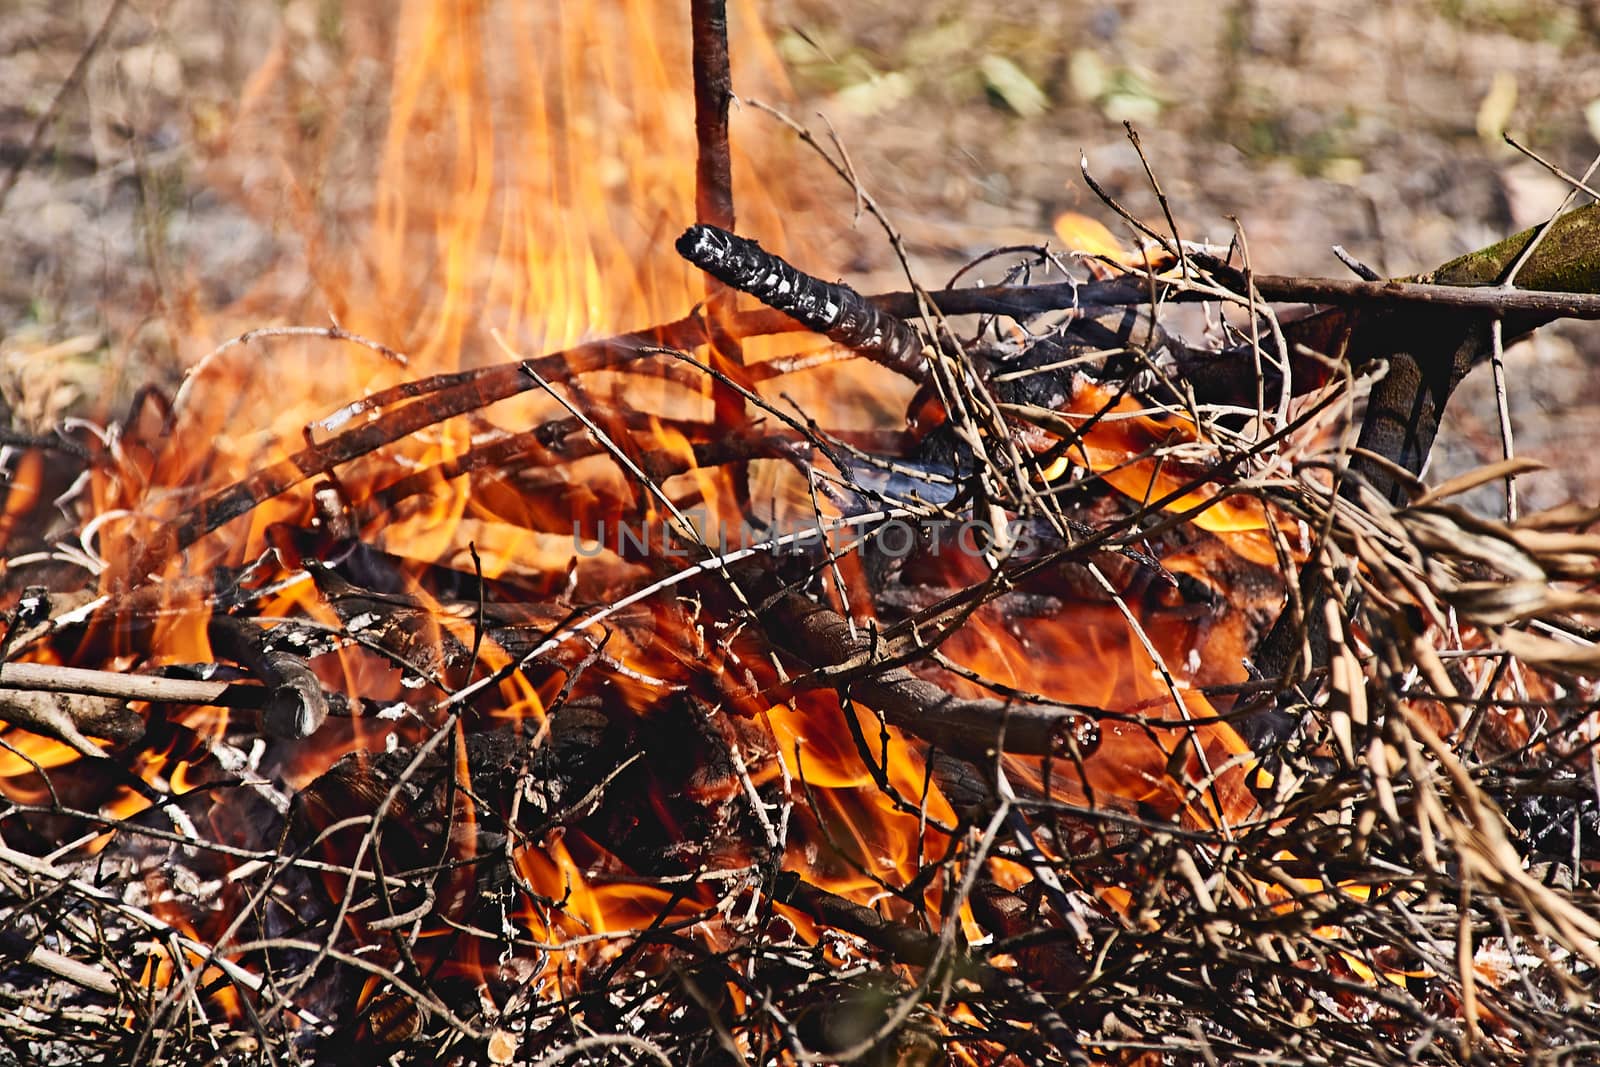 Bonfire in the bush on a sunny day by raul_ruiz